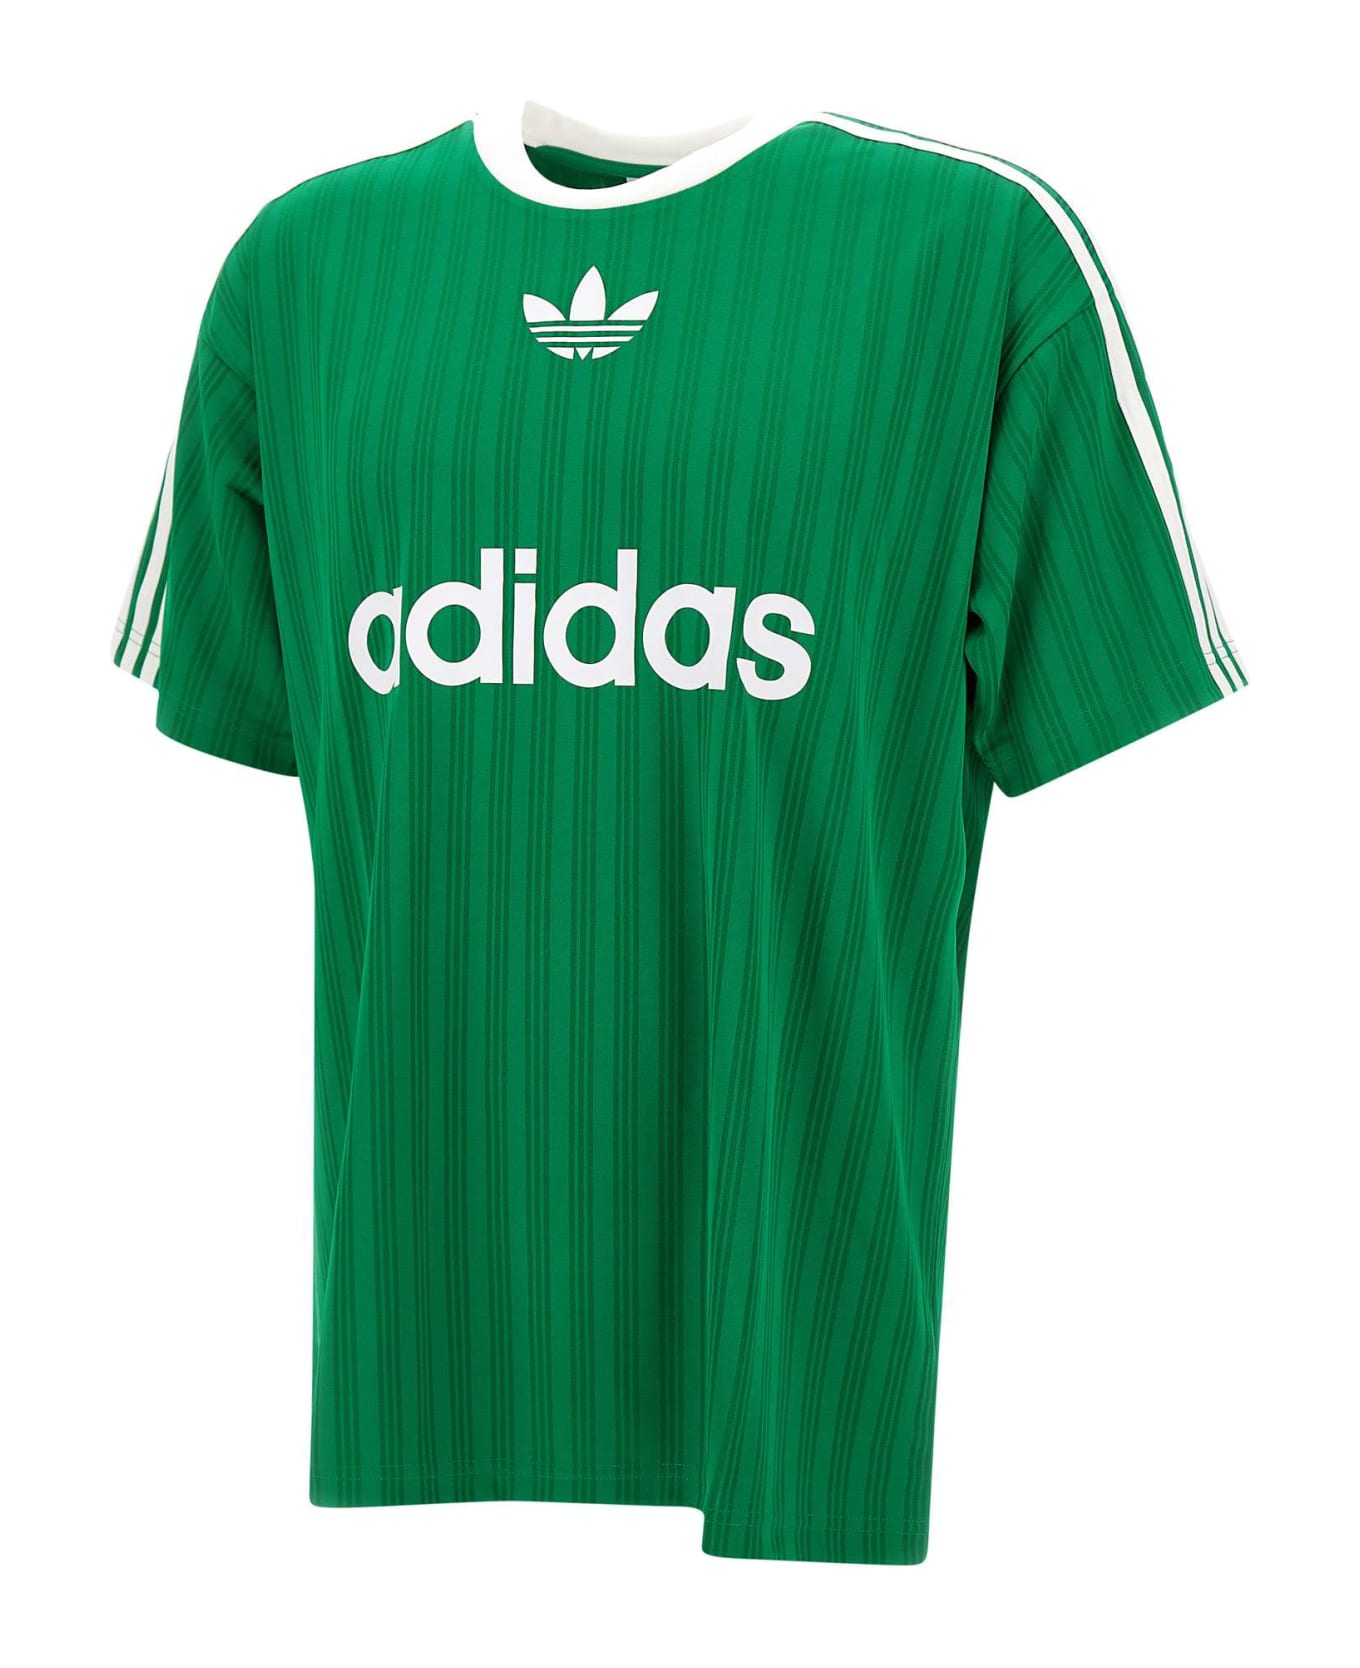 Adidas "adicolor" Jacquard Fabric T-shirt - GREEN